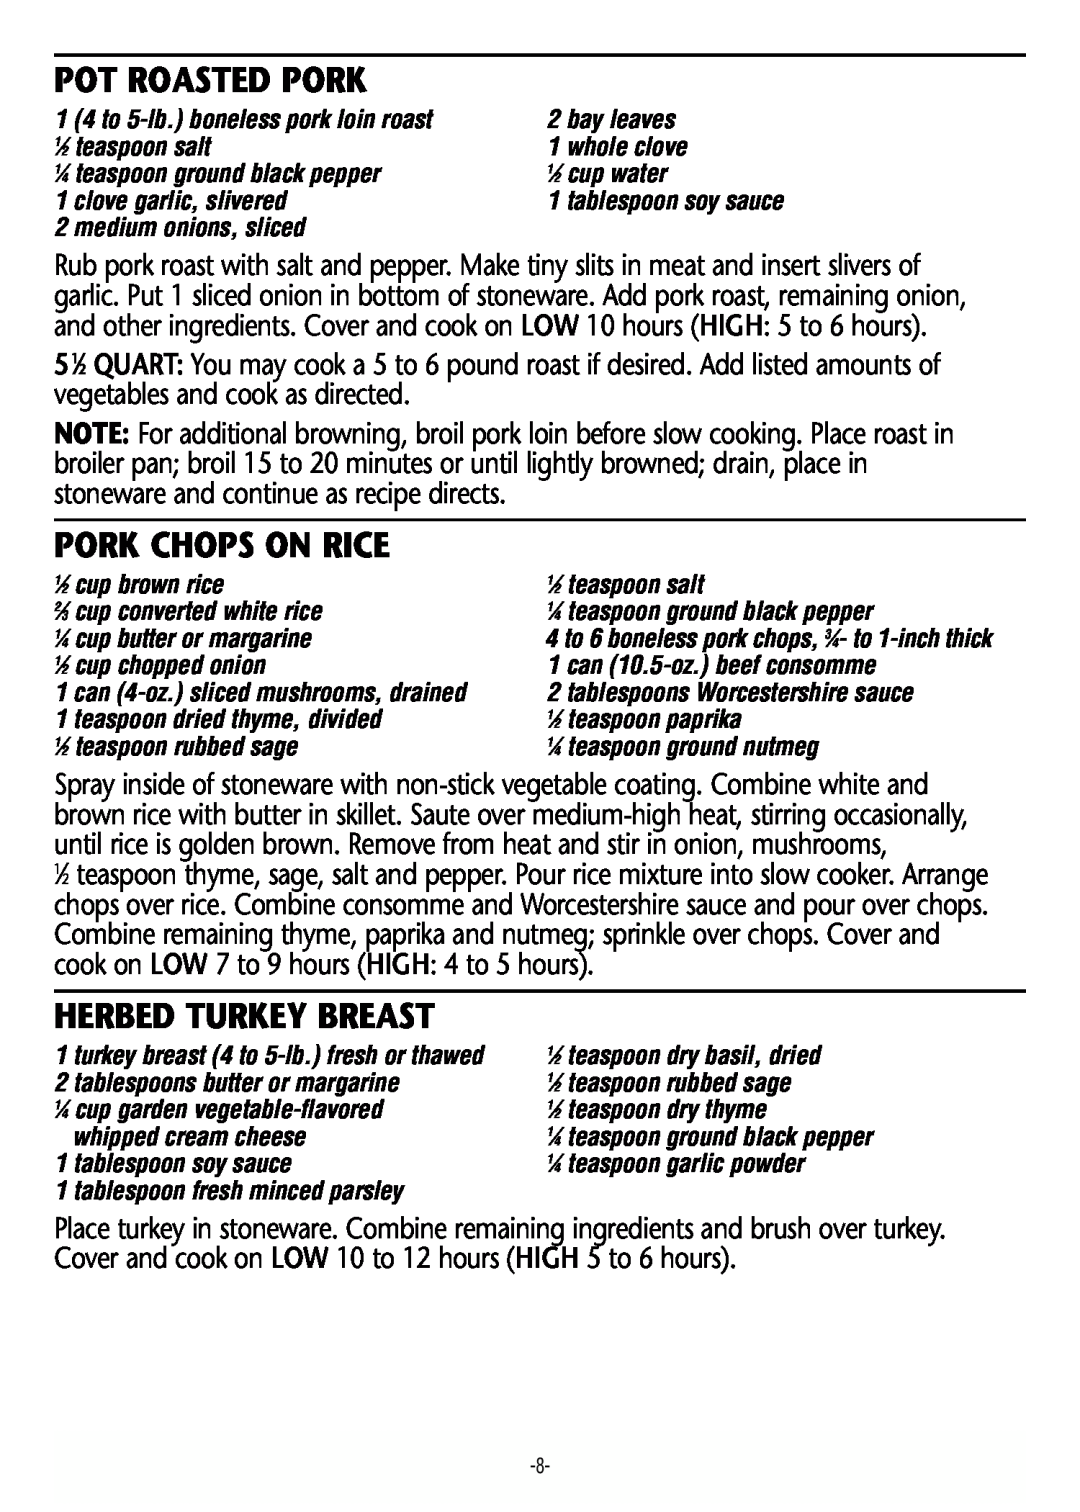 Rival 3745 manual Pot Roasted Pork, Pork Chops On Rice, Herbed Turkey Breast 